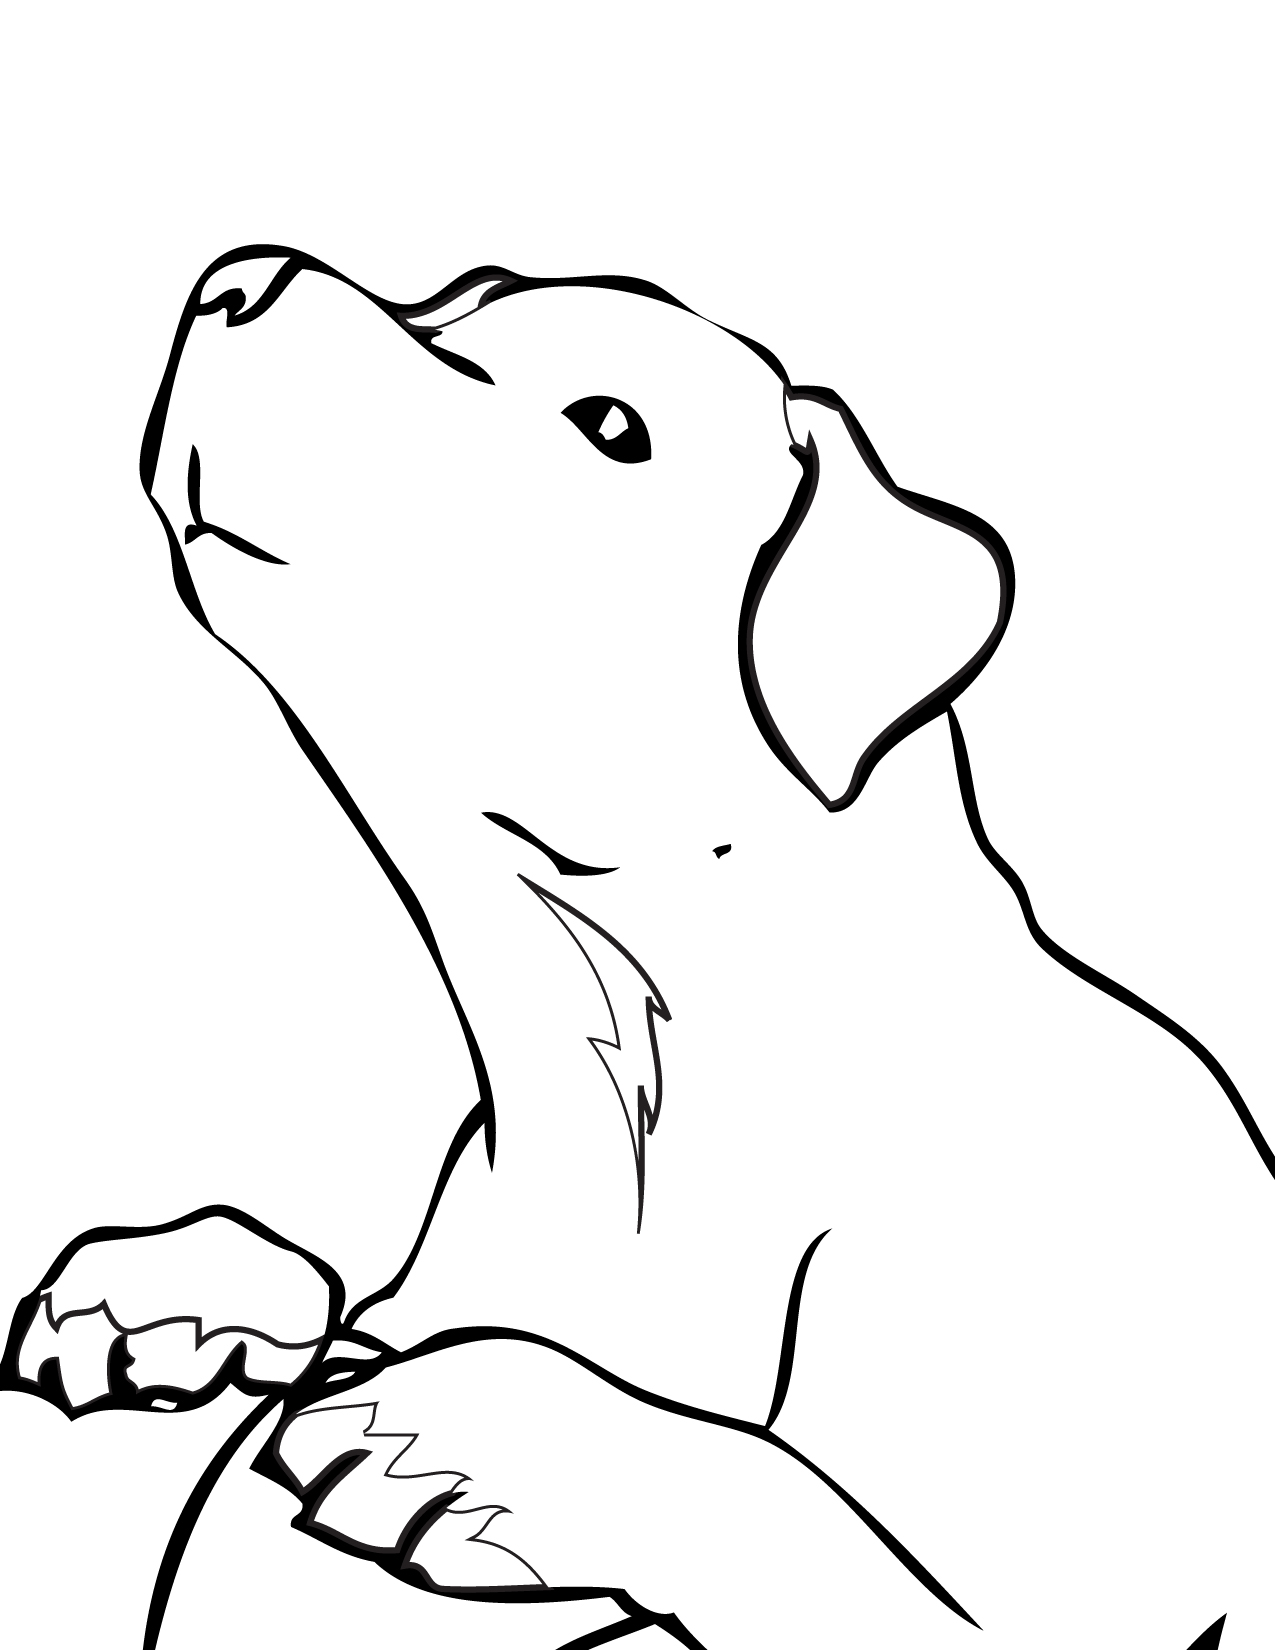 Labrador Retriever Coloring Page   Handipoints   ClipArt Best ...